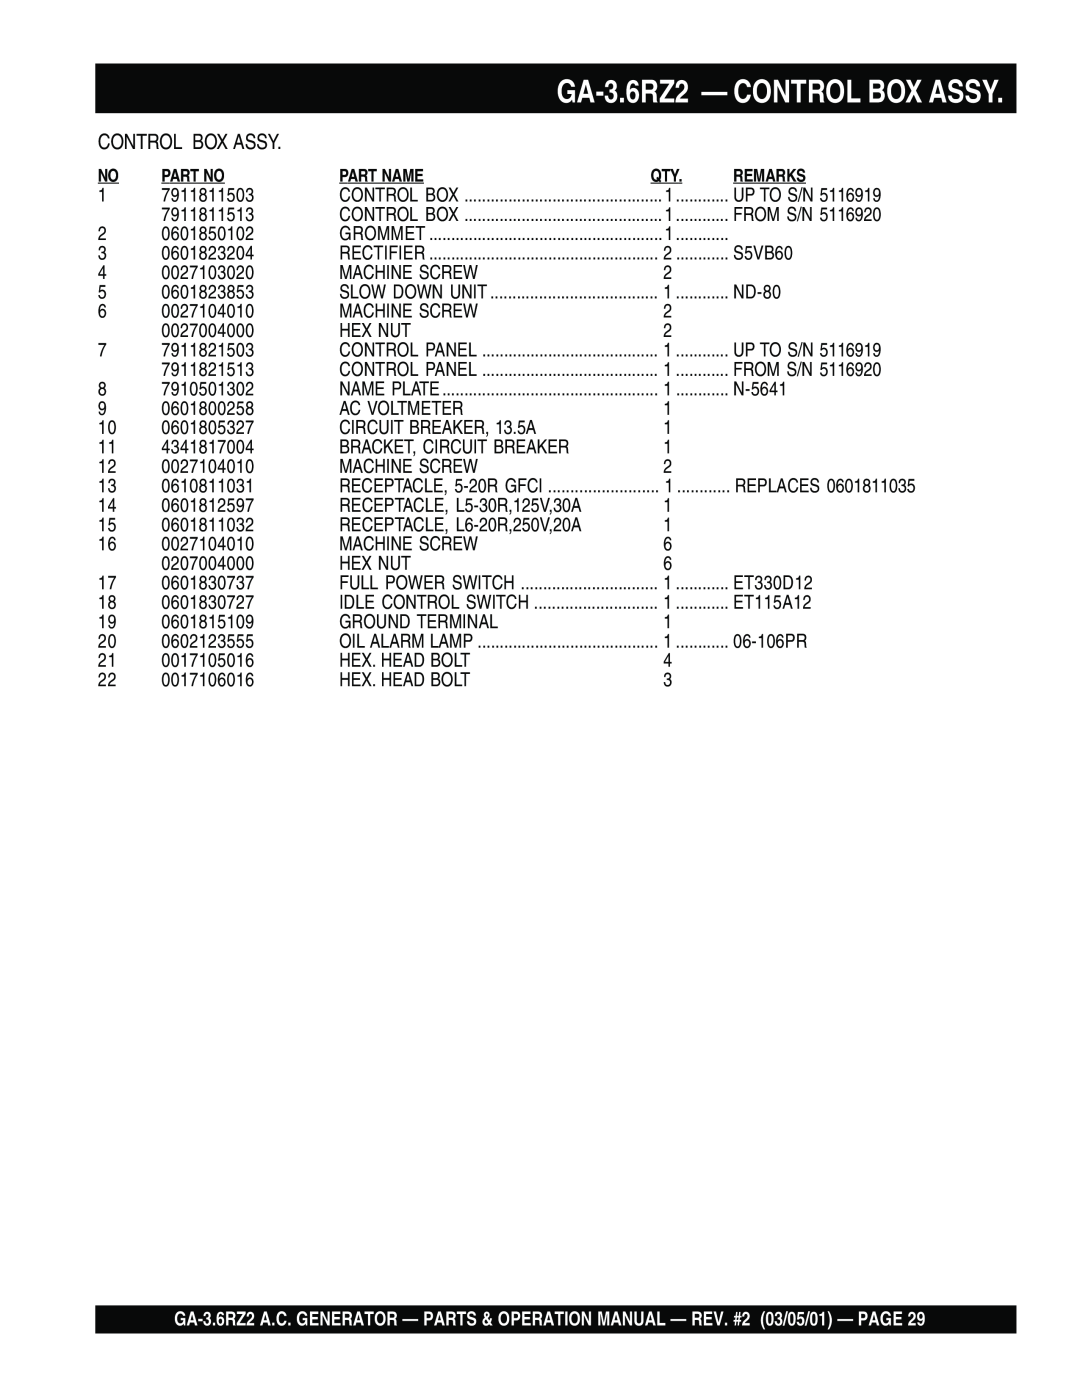 Multiquip operation manual GA-3.6RZ2— CONTROL BOX ASSY, 7911811503 